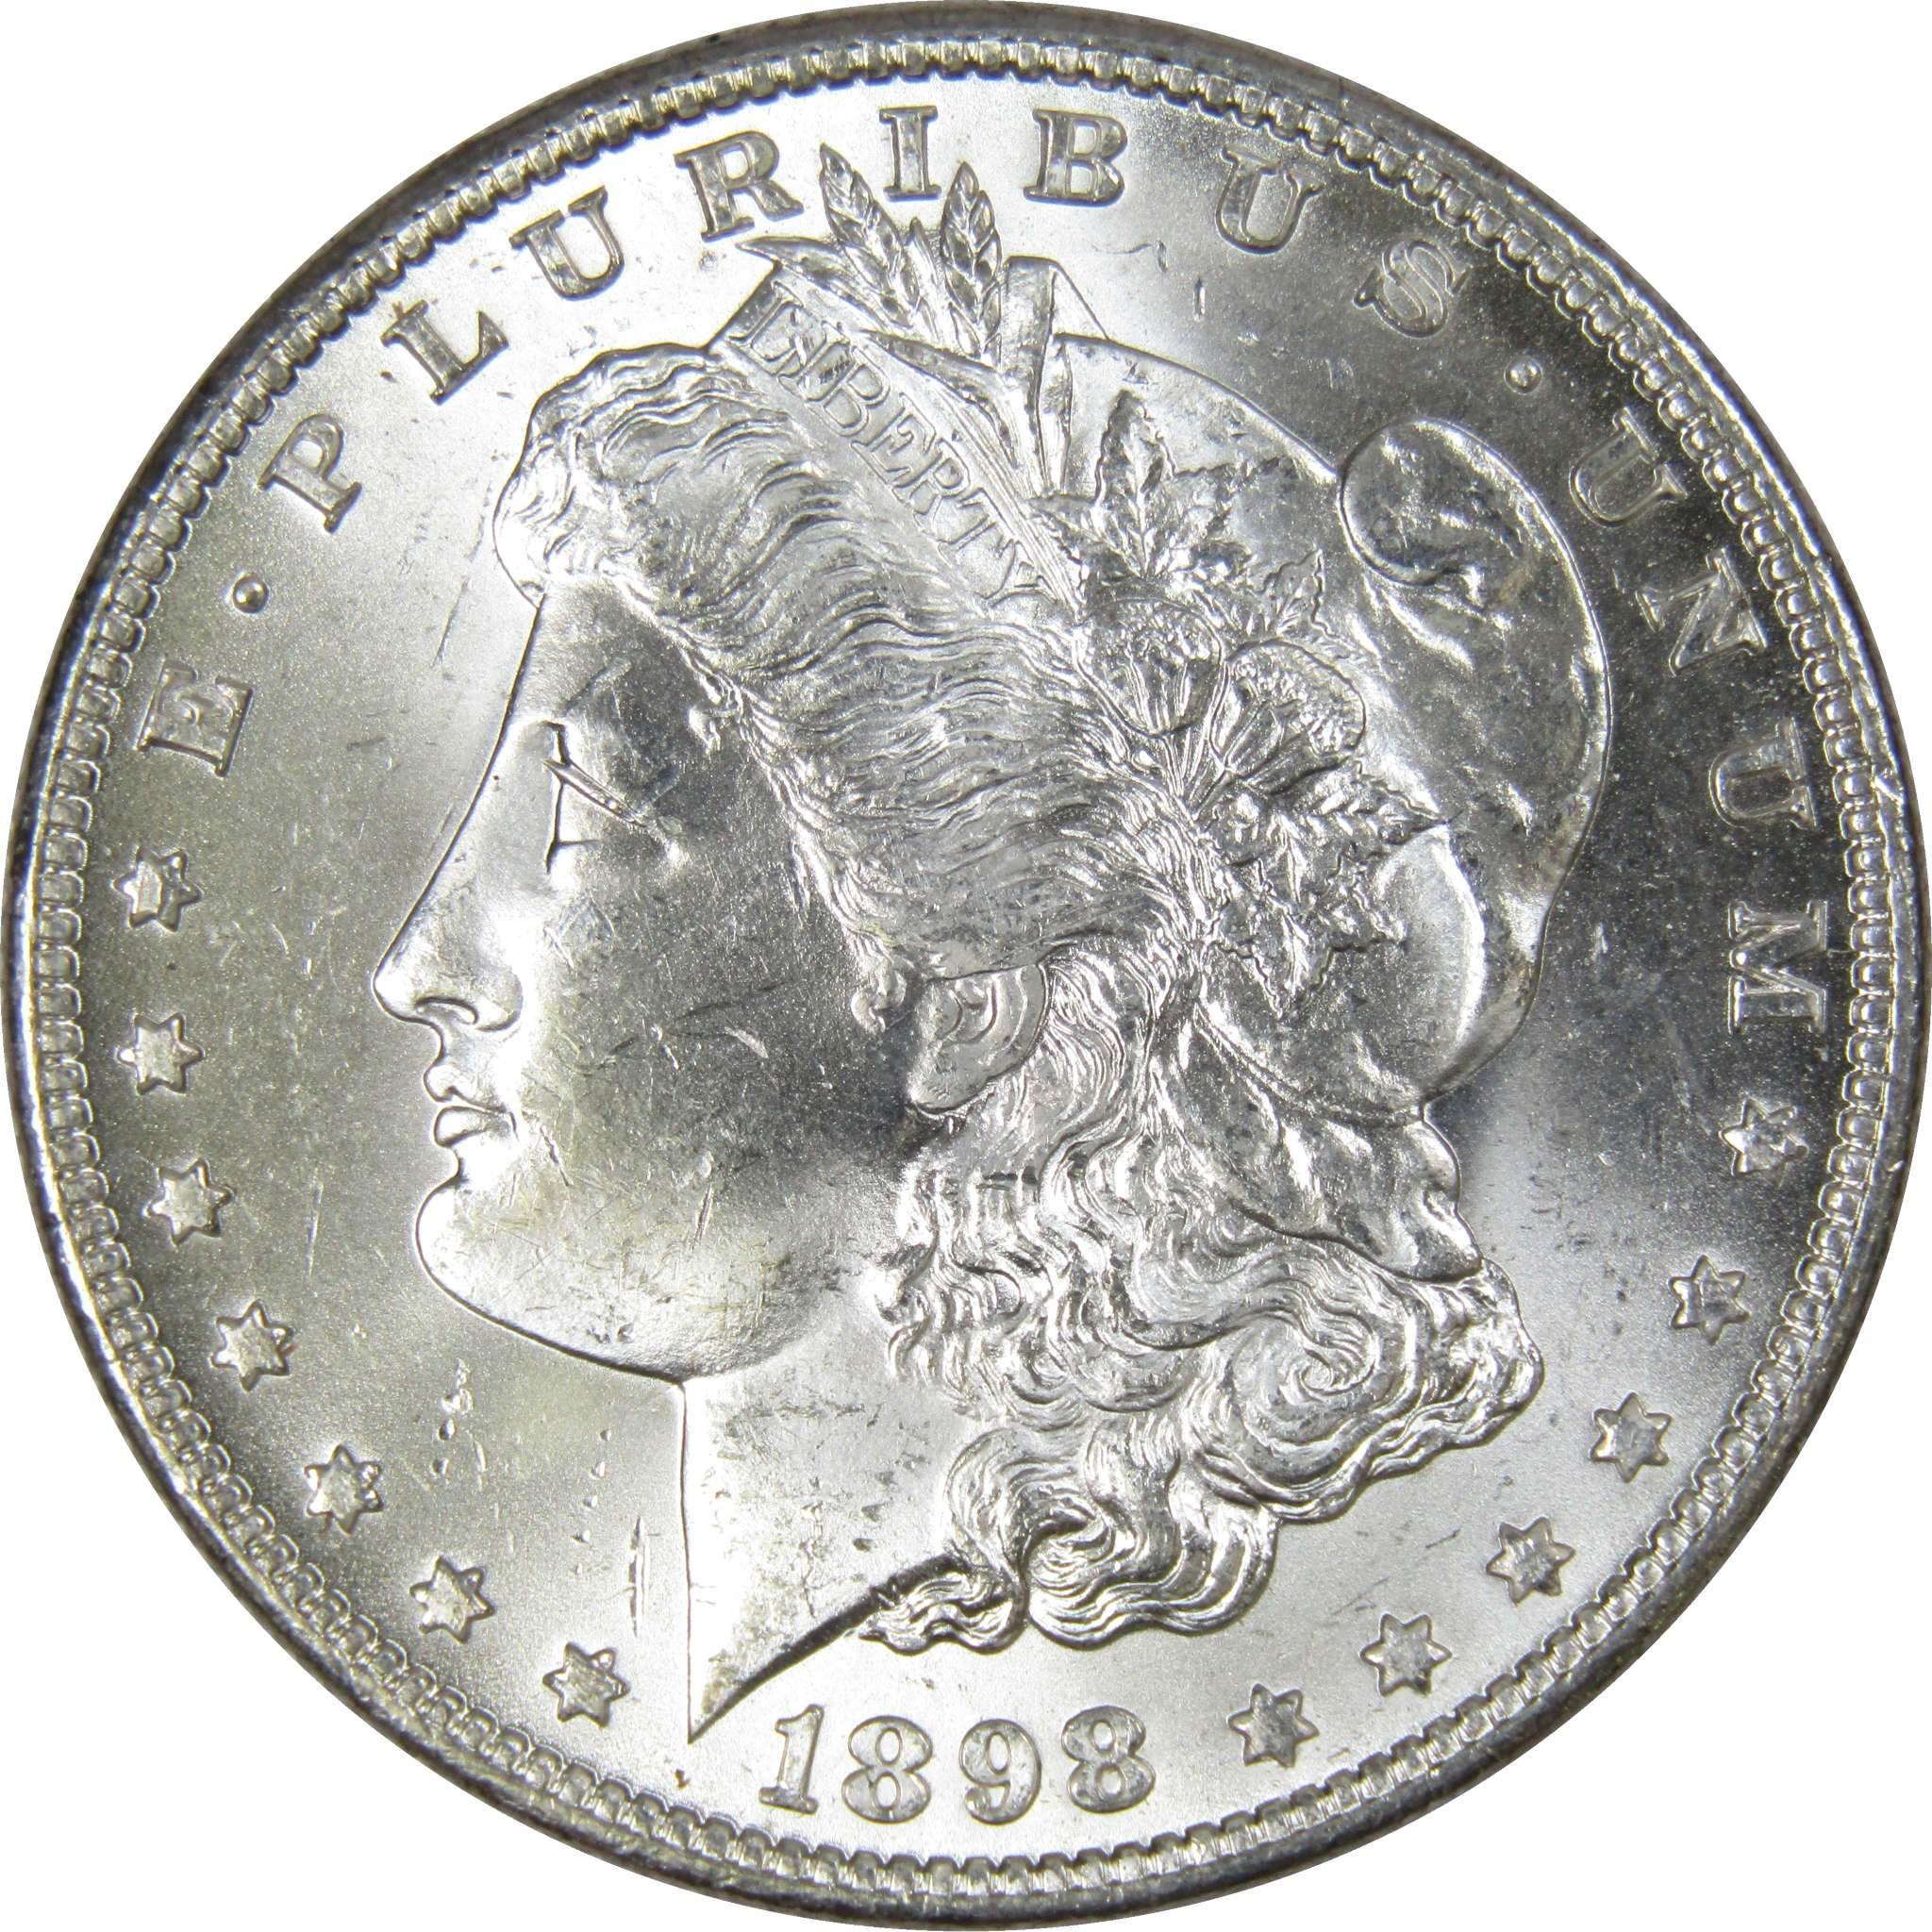 1898 O Morgan Dollar BU Choice Uncirculated Mint State 90% Silver $1 US Coin - Morgan coin - Morgan silver dollar - Morgan silver dollar for sale - Profile Coins &amp; Collectibles